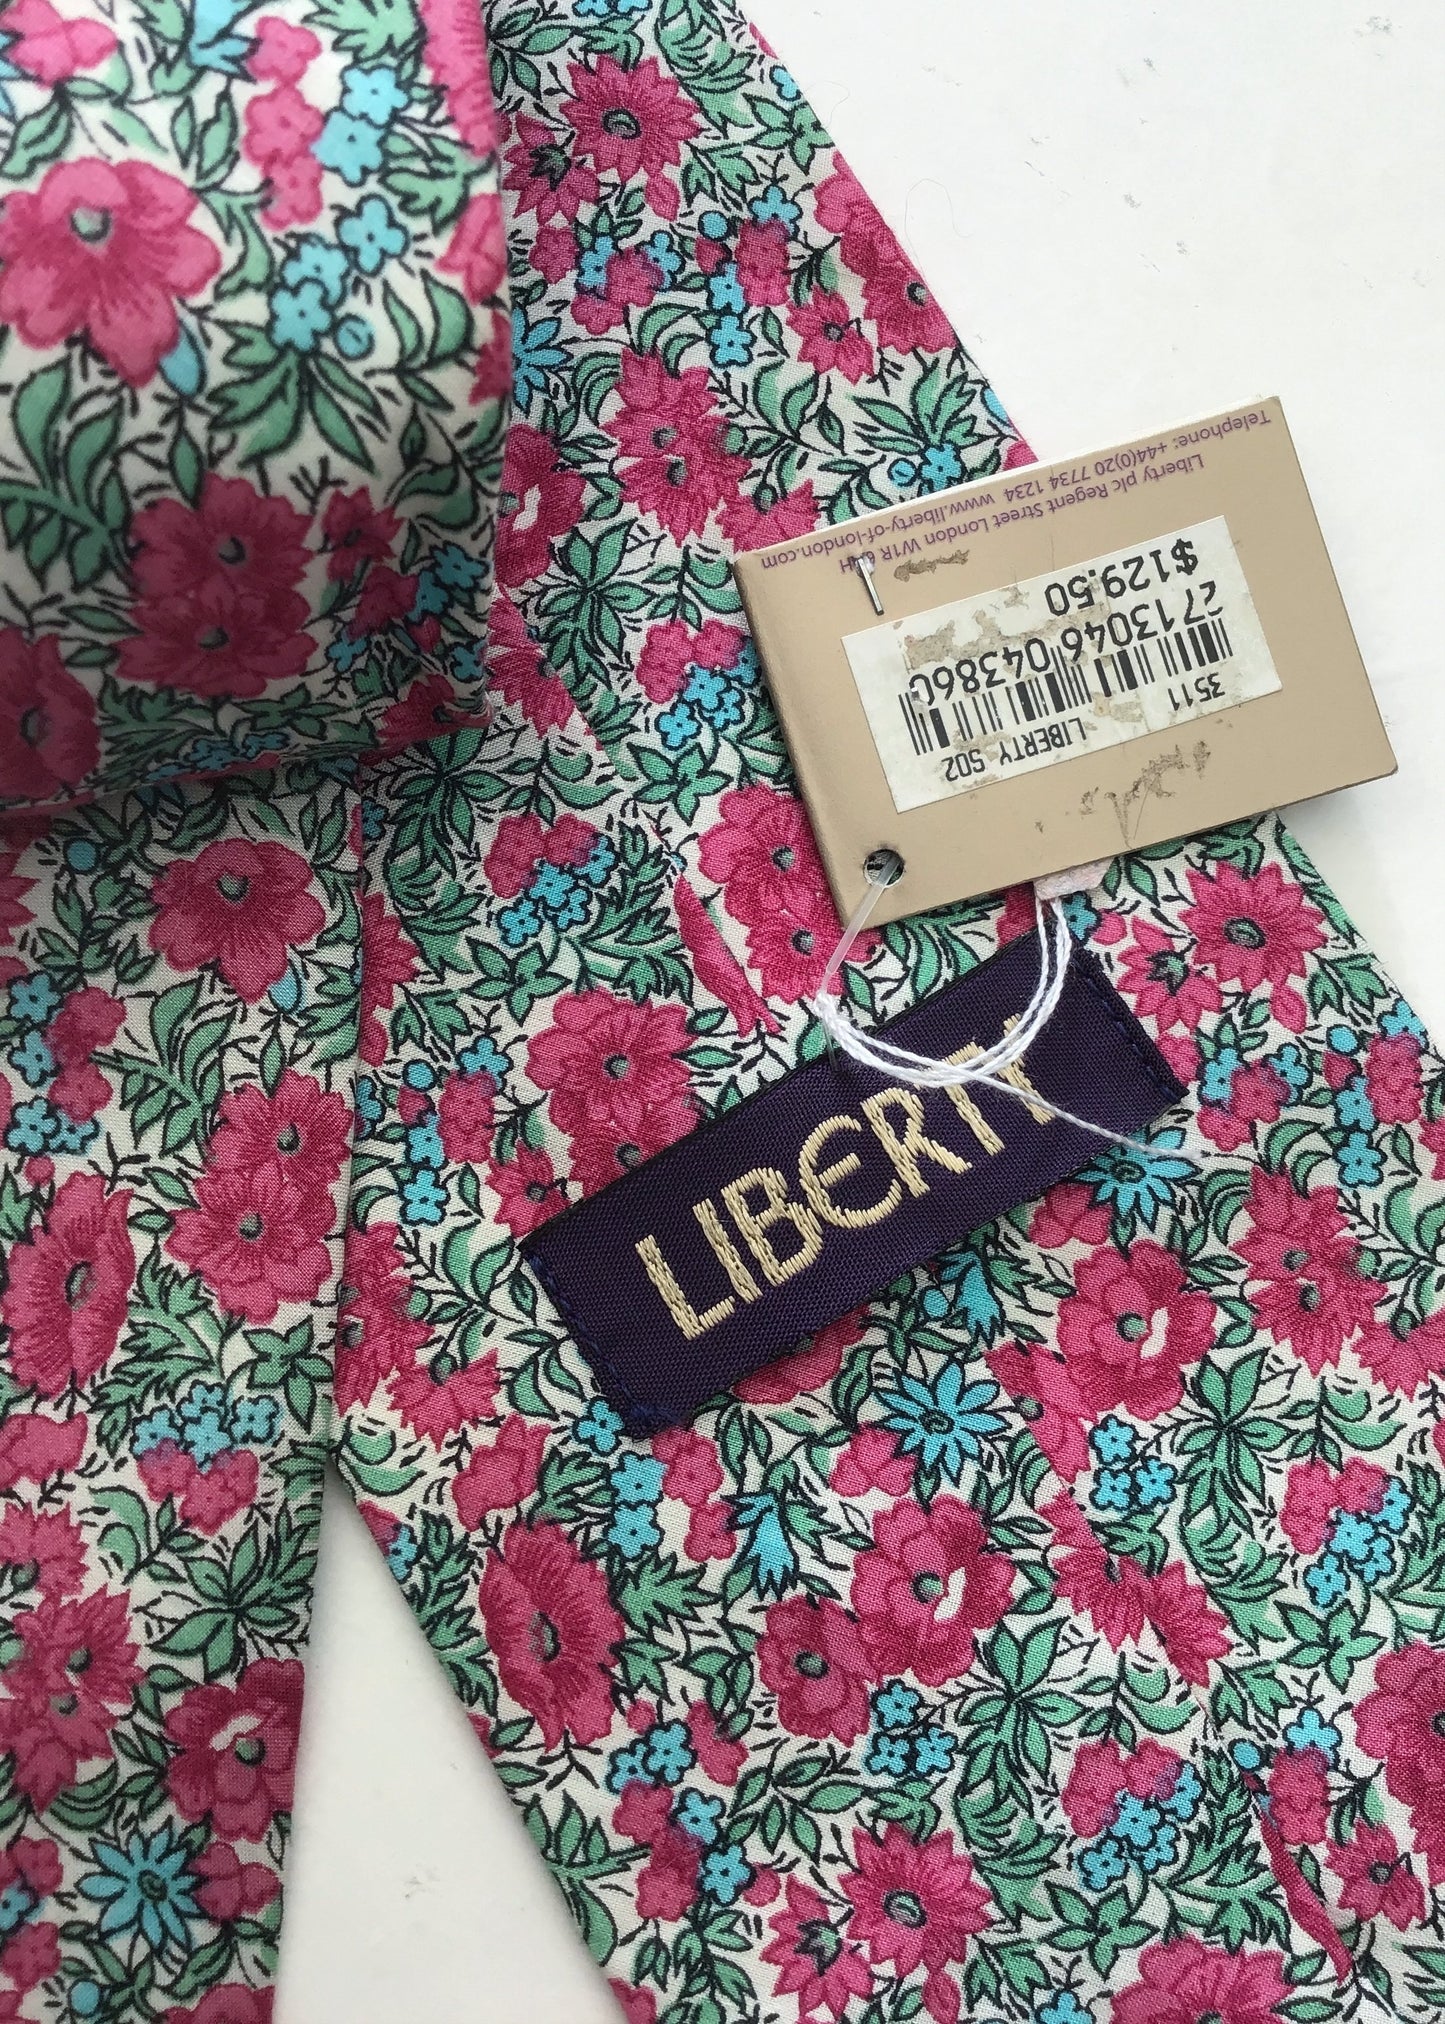 Floral LIberty Print Silk Neck Tie • Deadstock